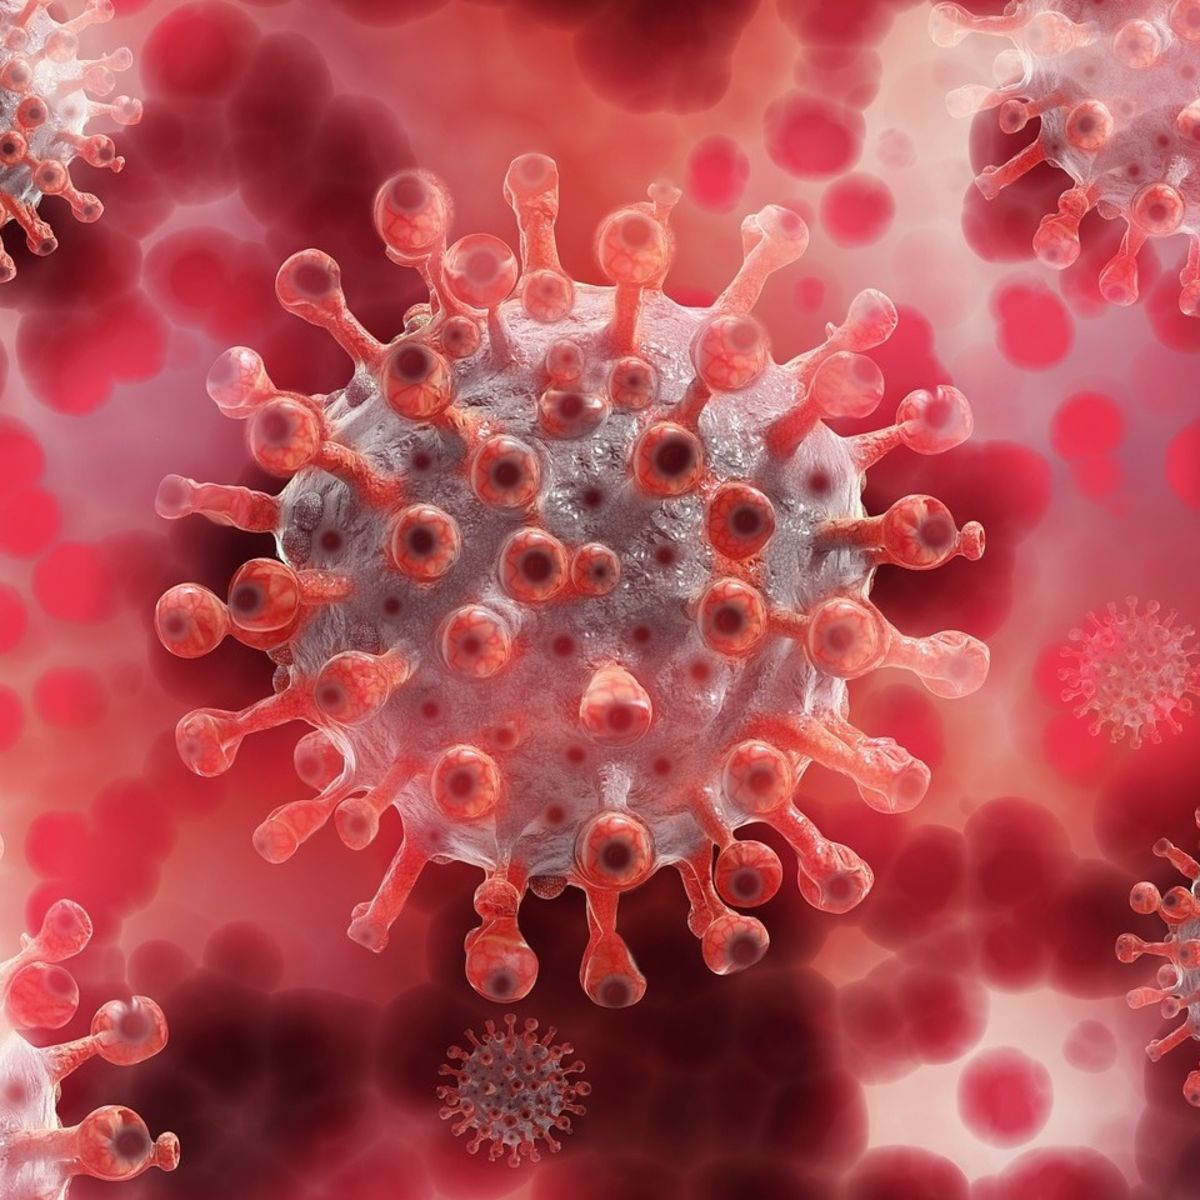 View of coronavirus on cellular level